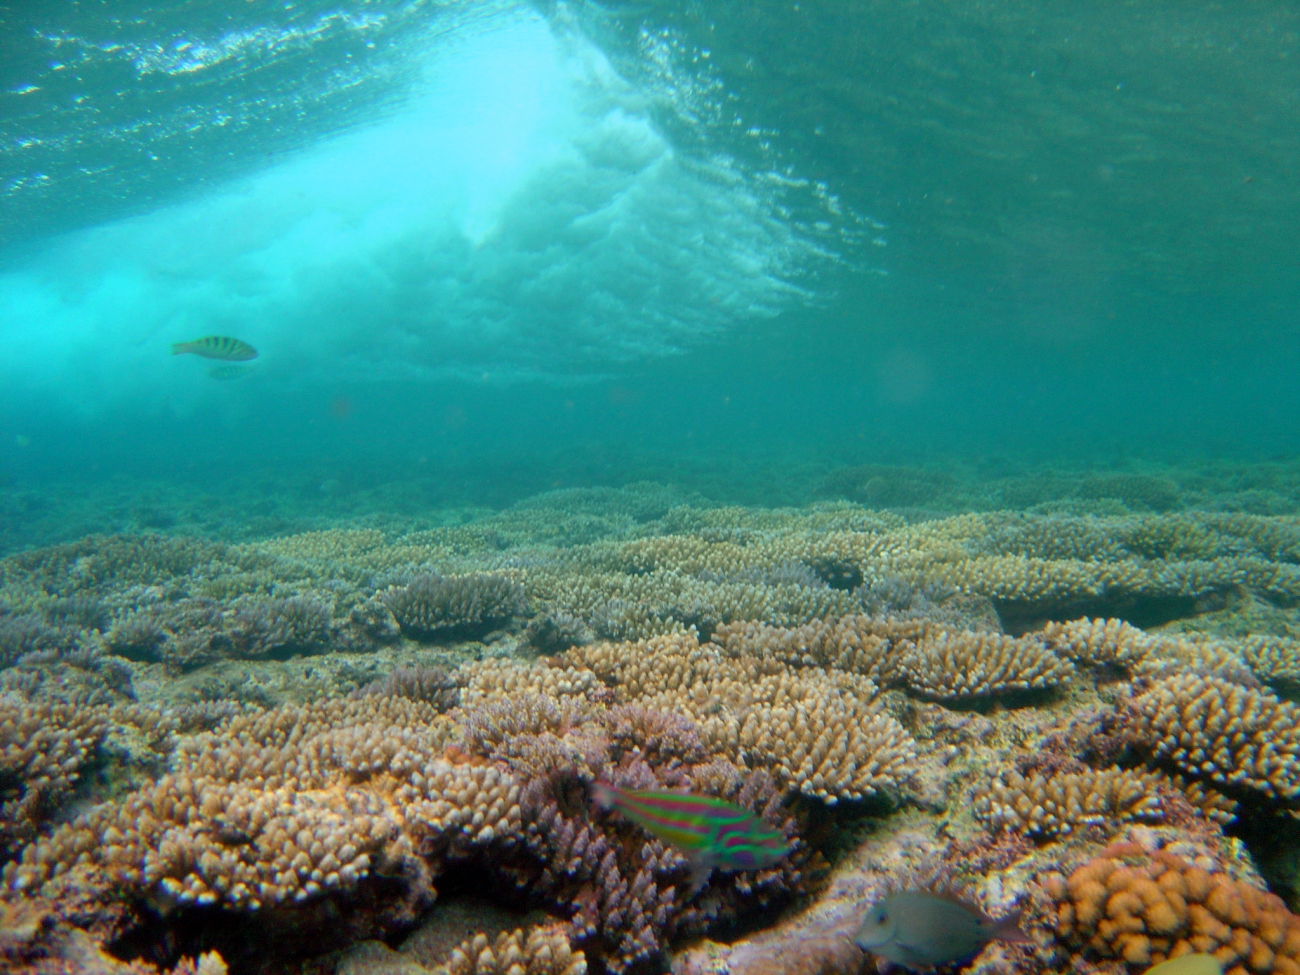 Fivestripe (Thalassoma quinquevittatum) wrasse in foreground with breakingwave over shallow reef